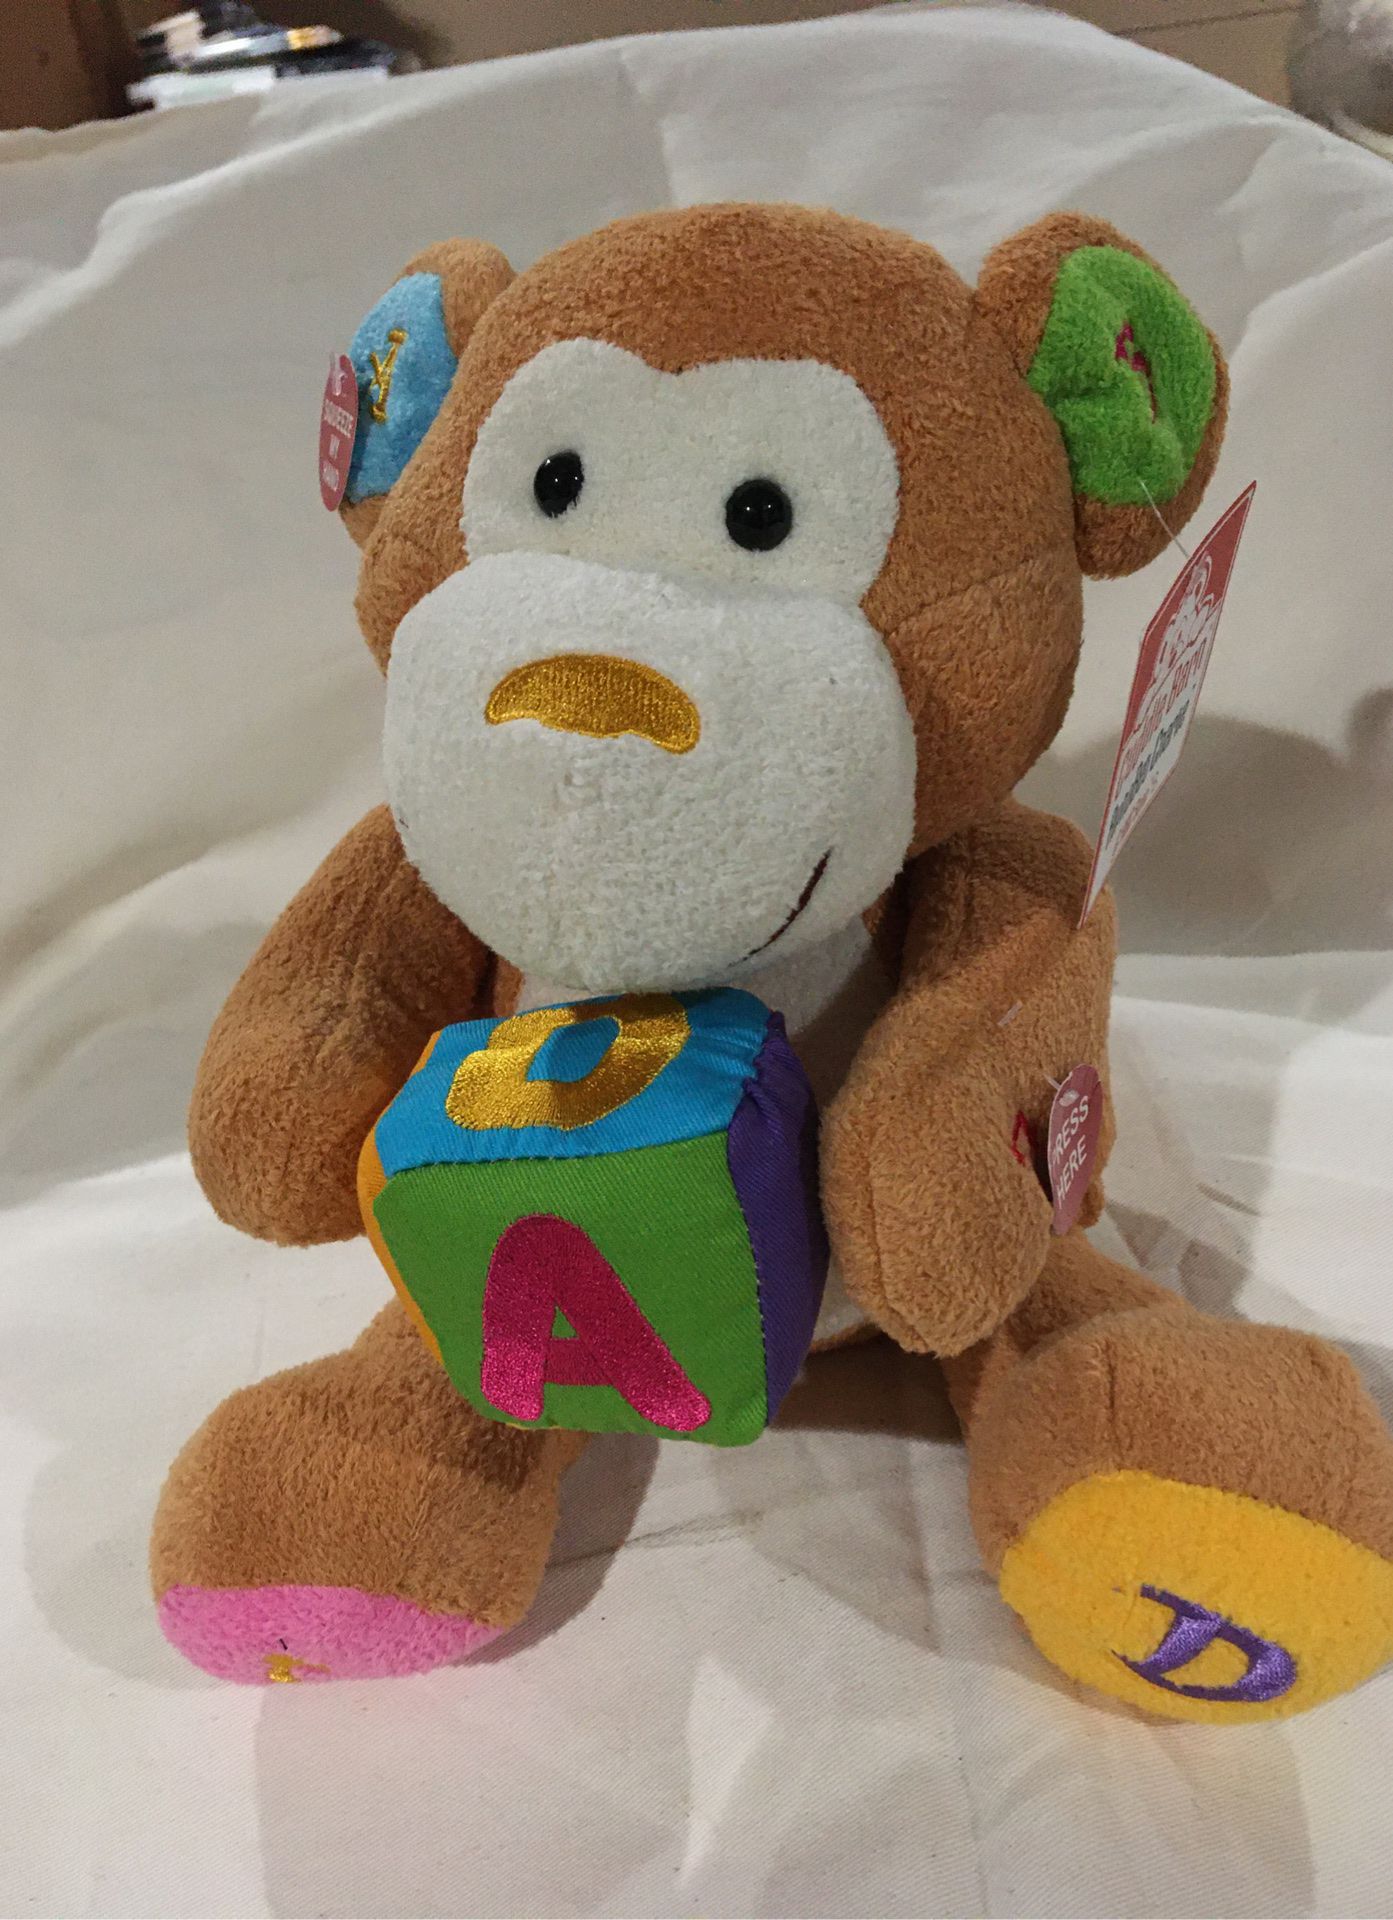 Brand new Alphabet Charlie -Animated Singing Monkey Stuffed Animal plus toy 11”